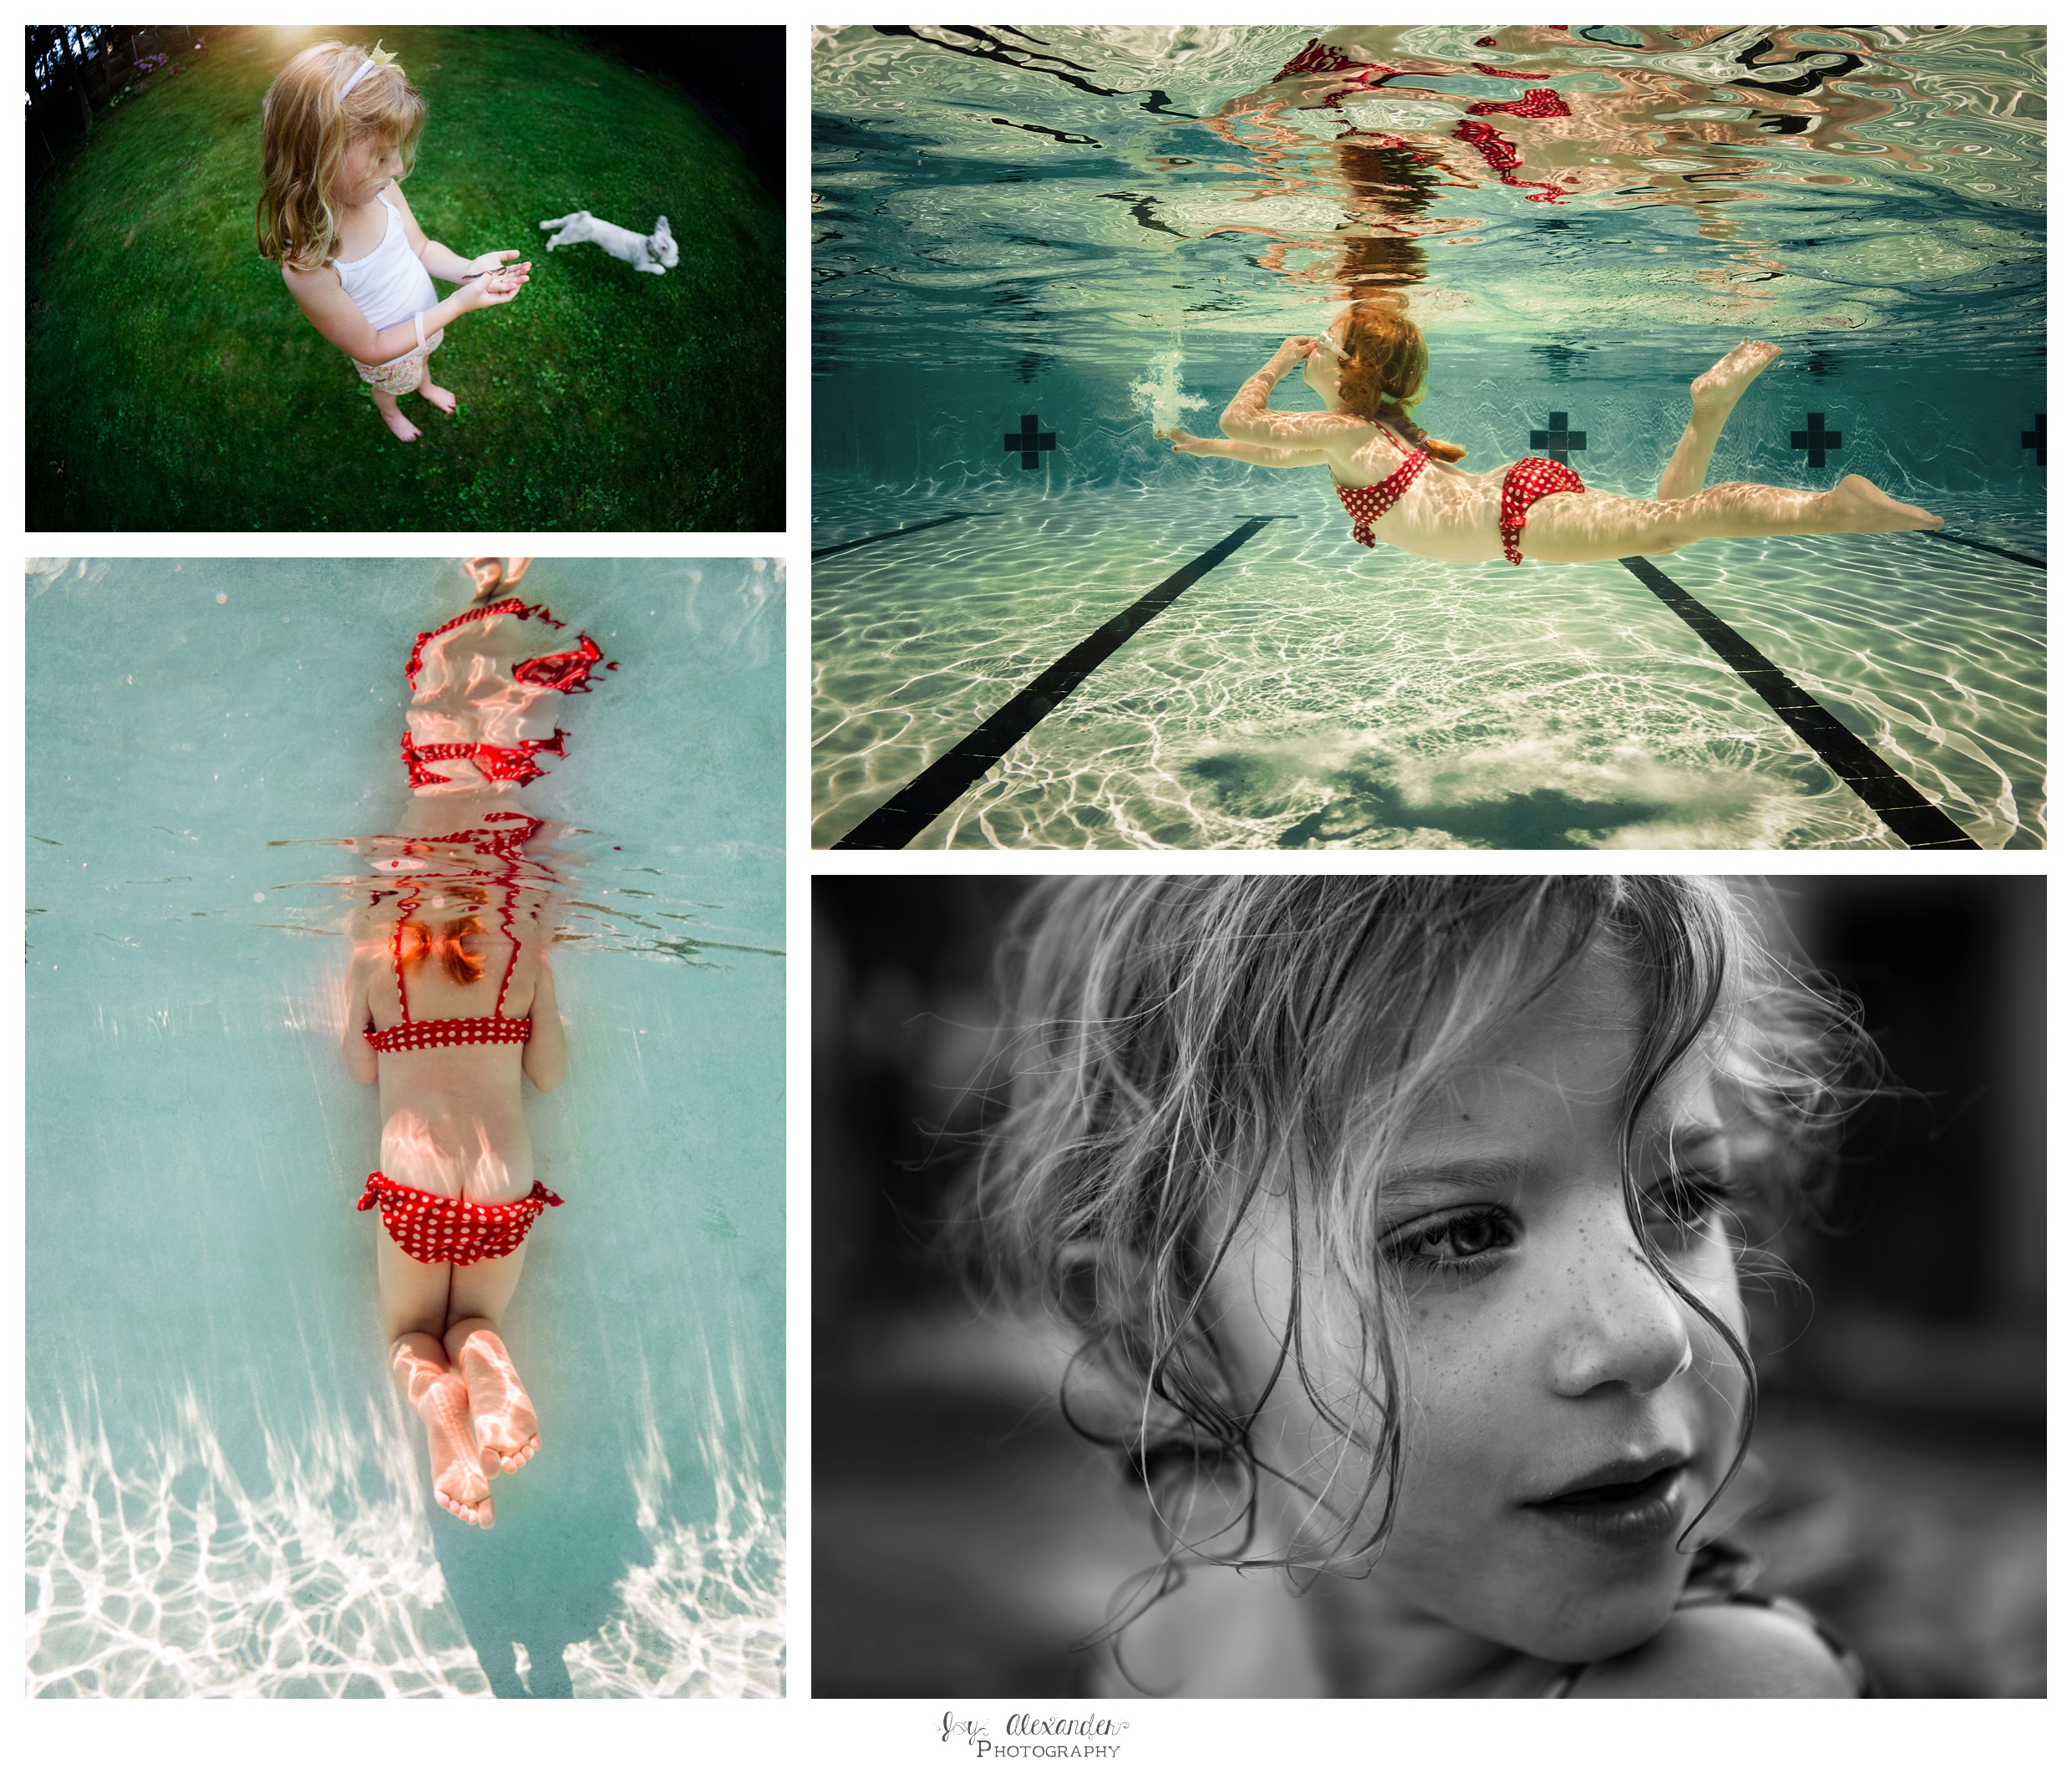 Haverstraw Marina, little girl swimming